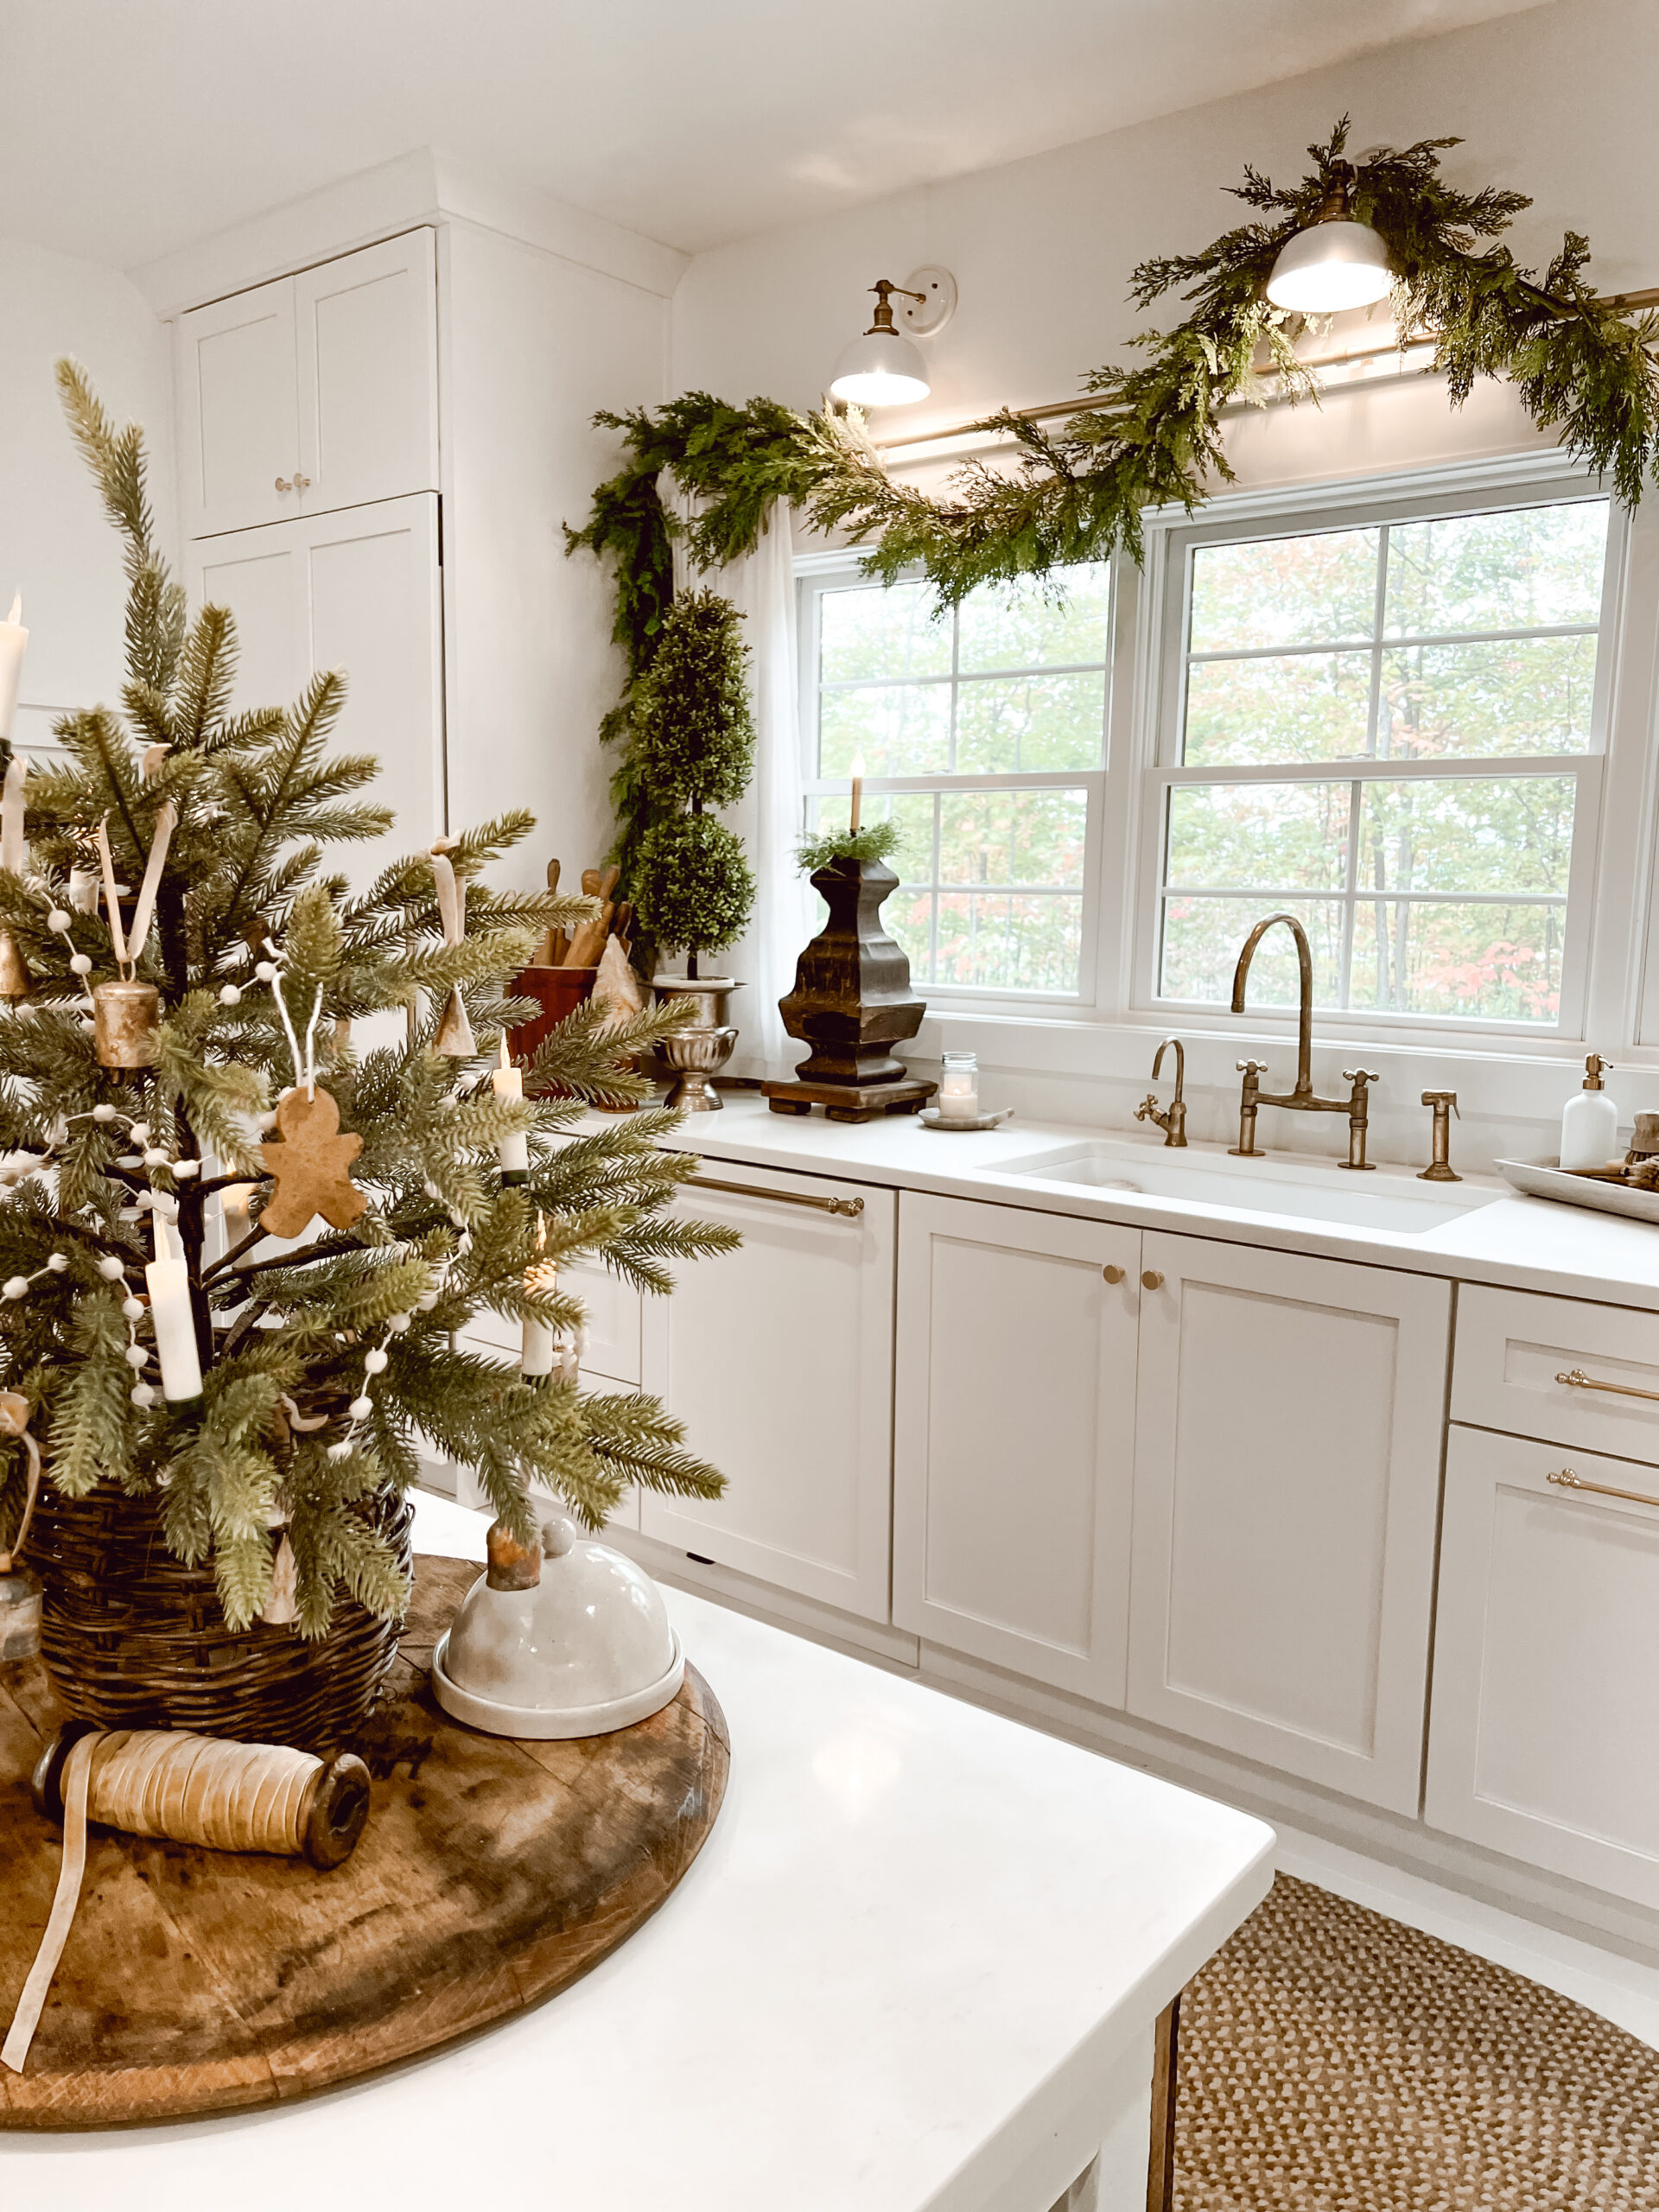 Woodland Christmas in the kitchen - kitchen decor